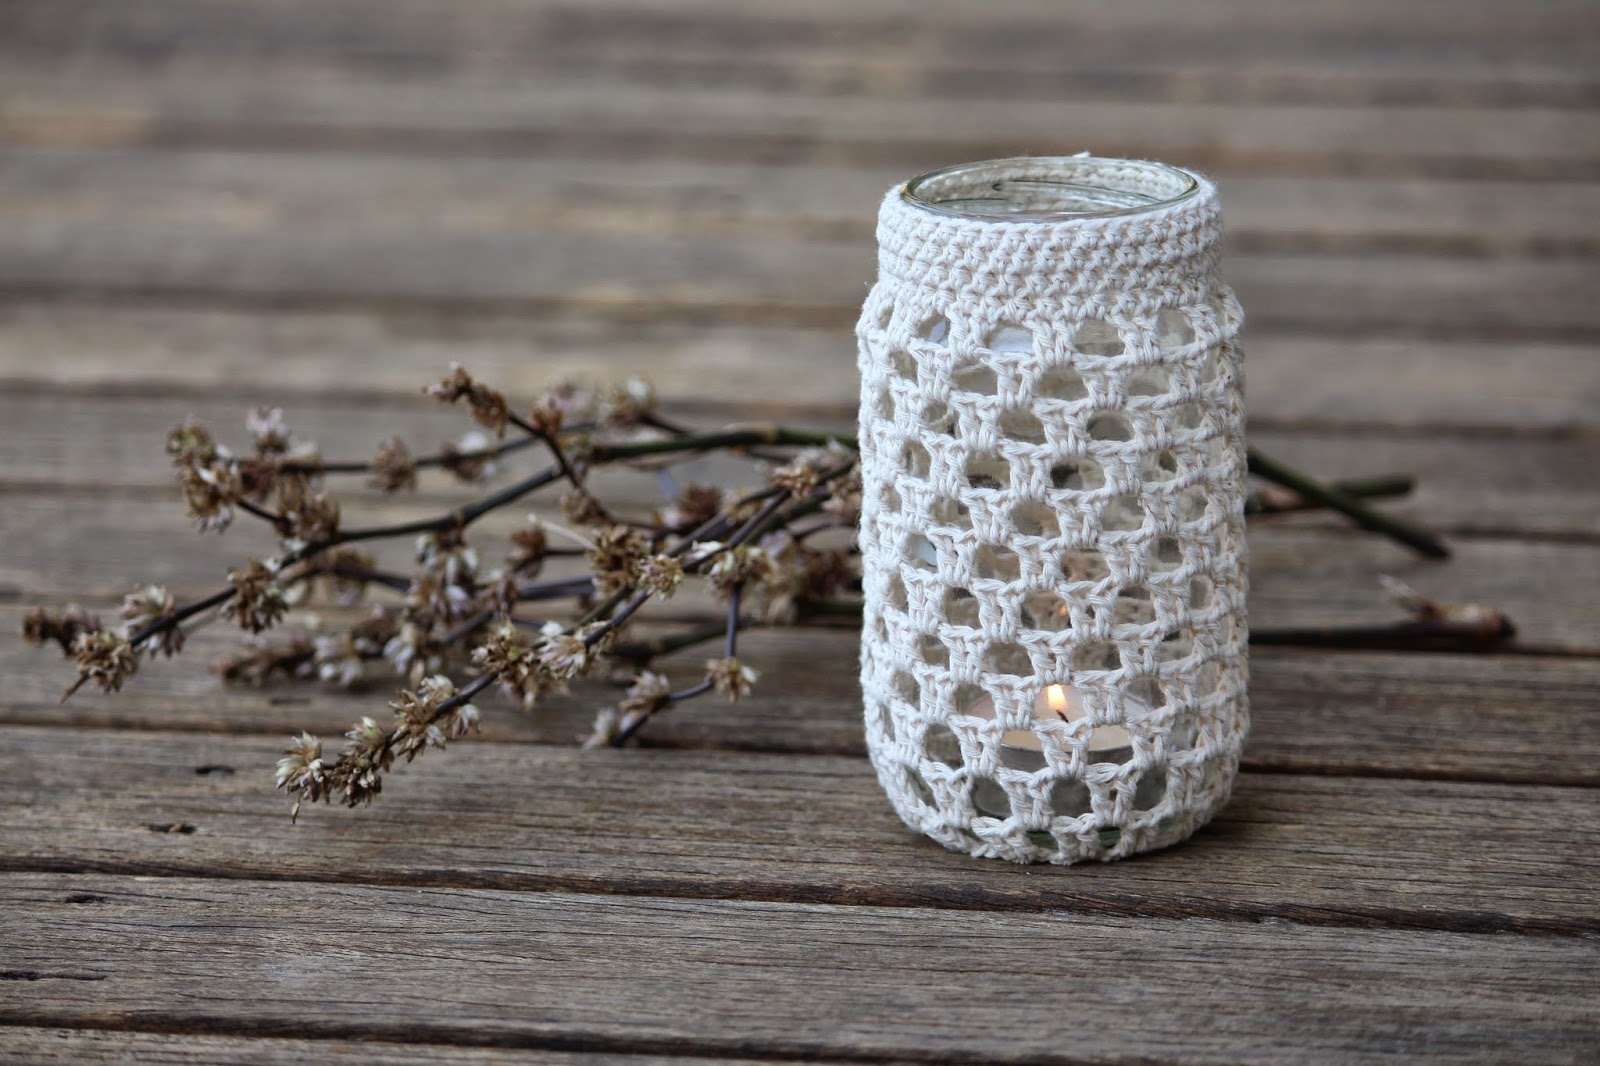 DIY crochet jar cozy with a pattern